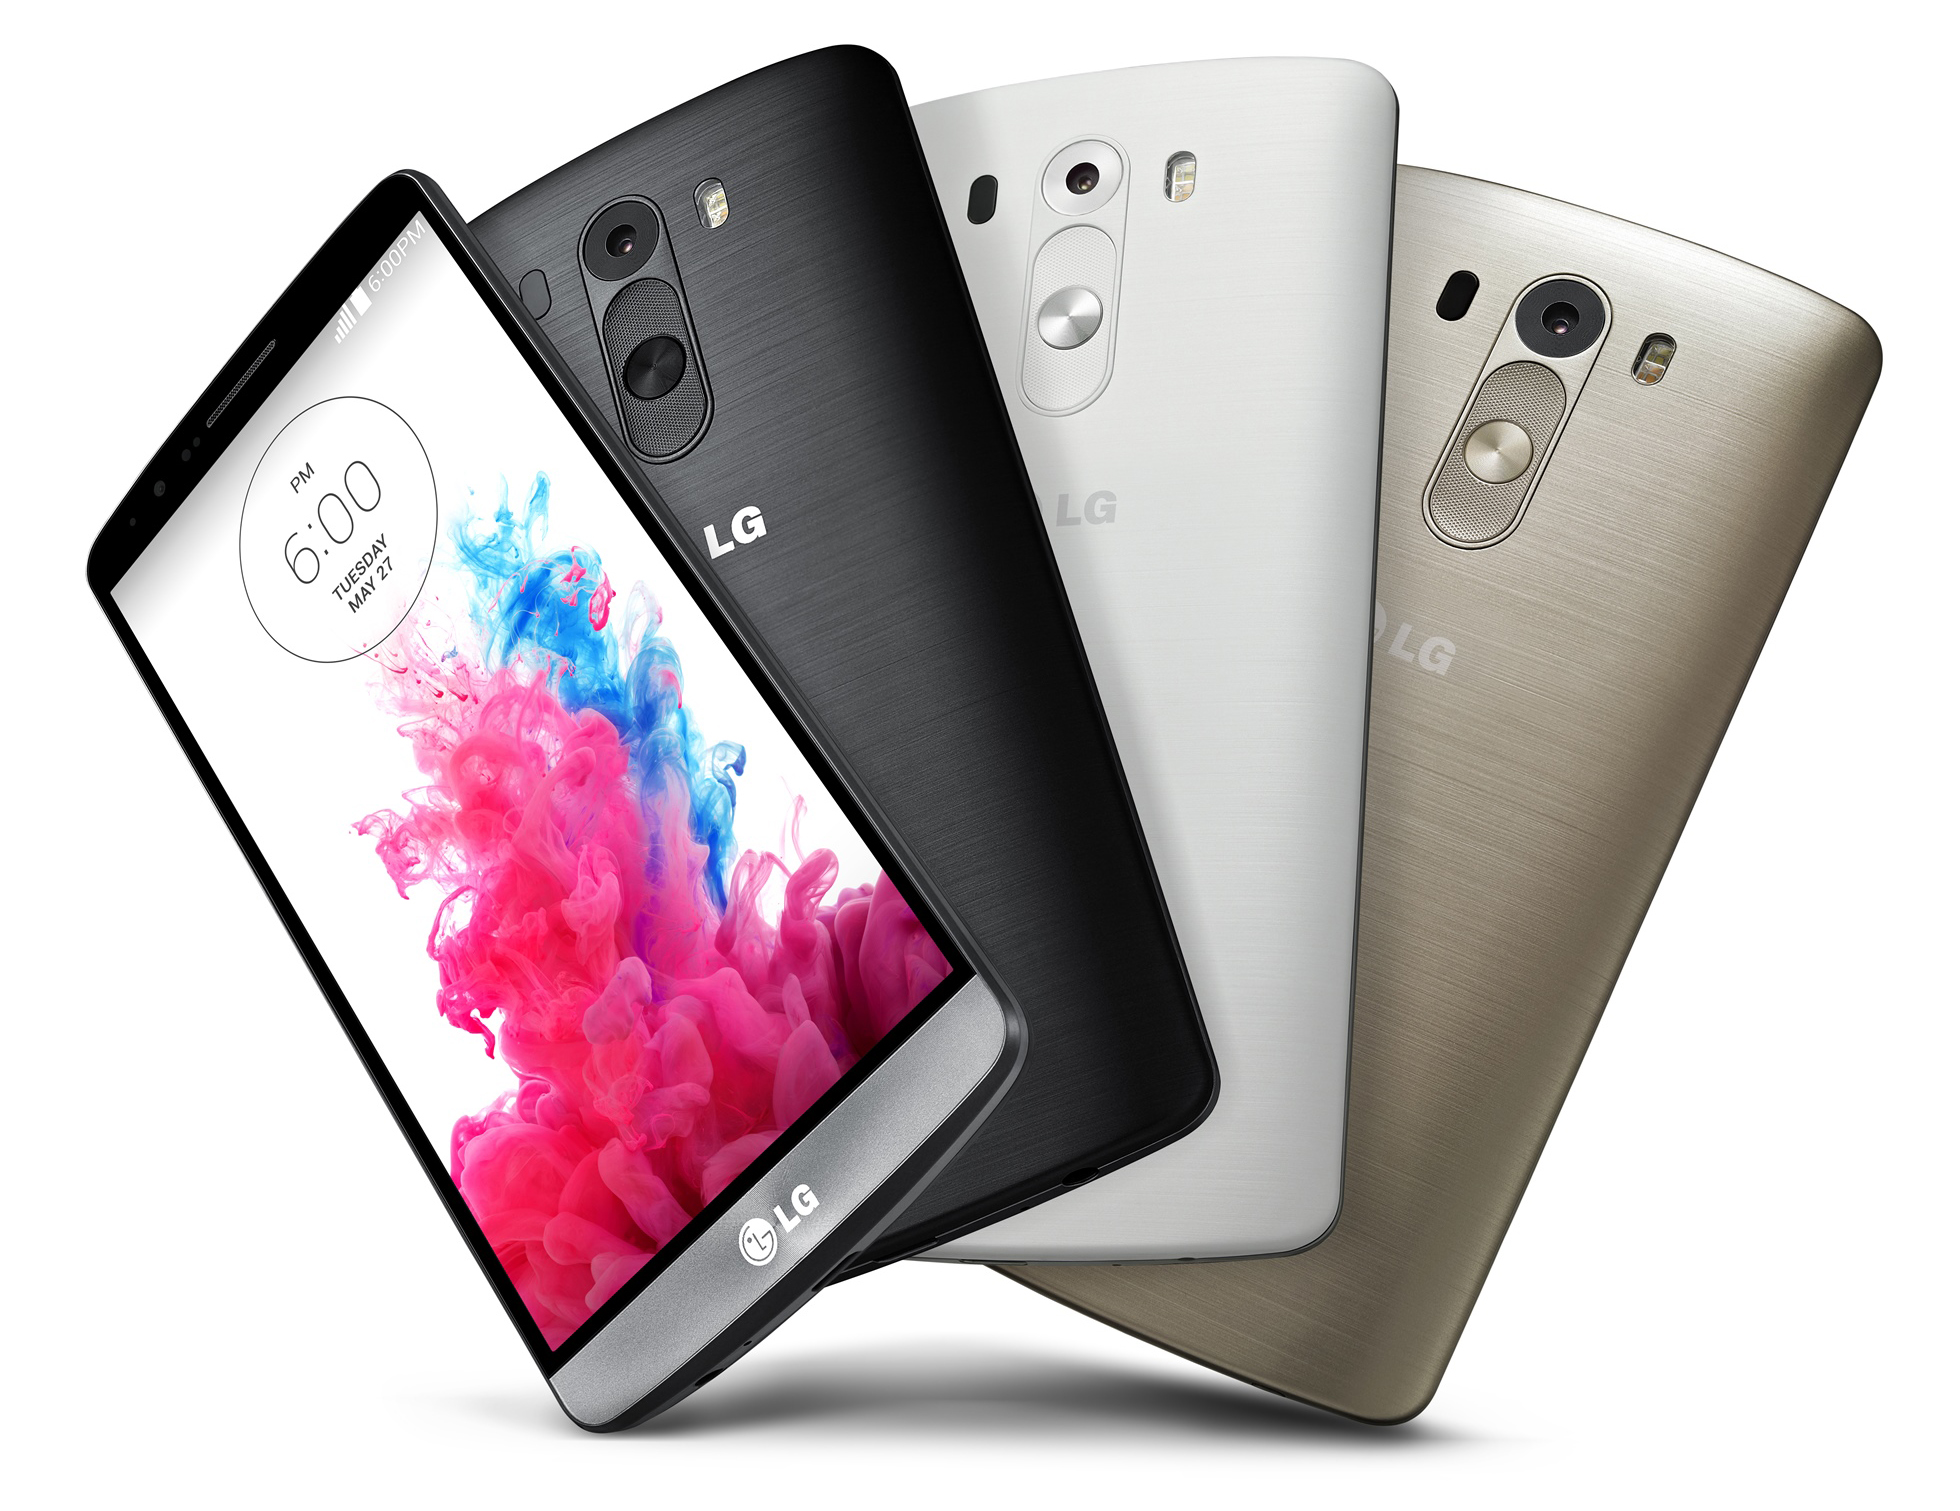 LG G3 นิยามใหม่ของความเรียบง่ายและชาญฉลาด ภายใต้แนวคิด ?Simple is the New Smart?